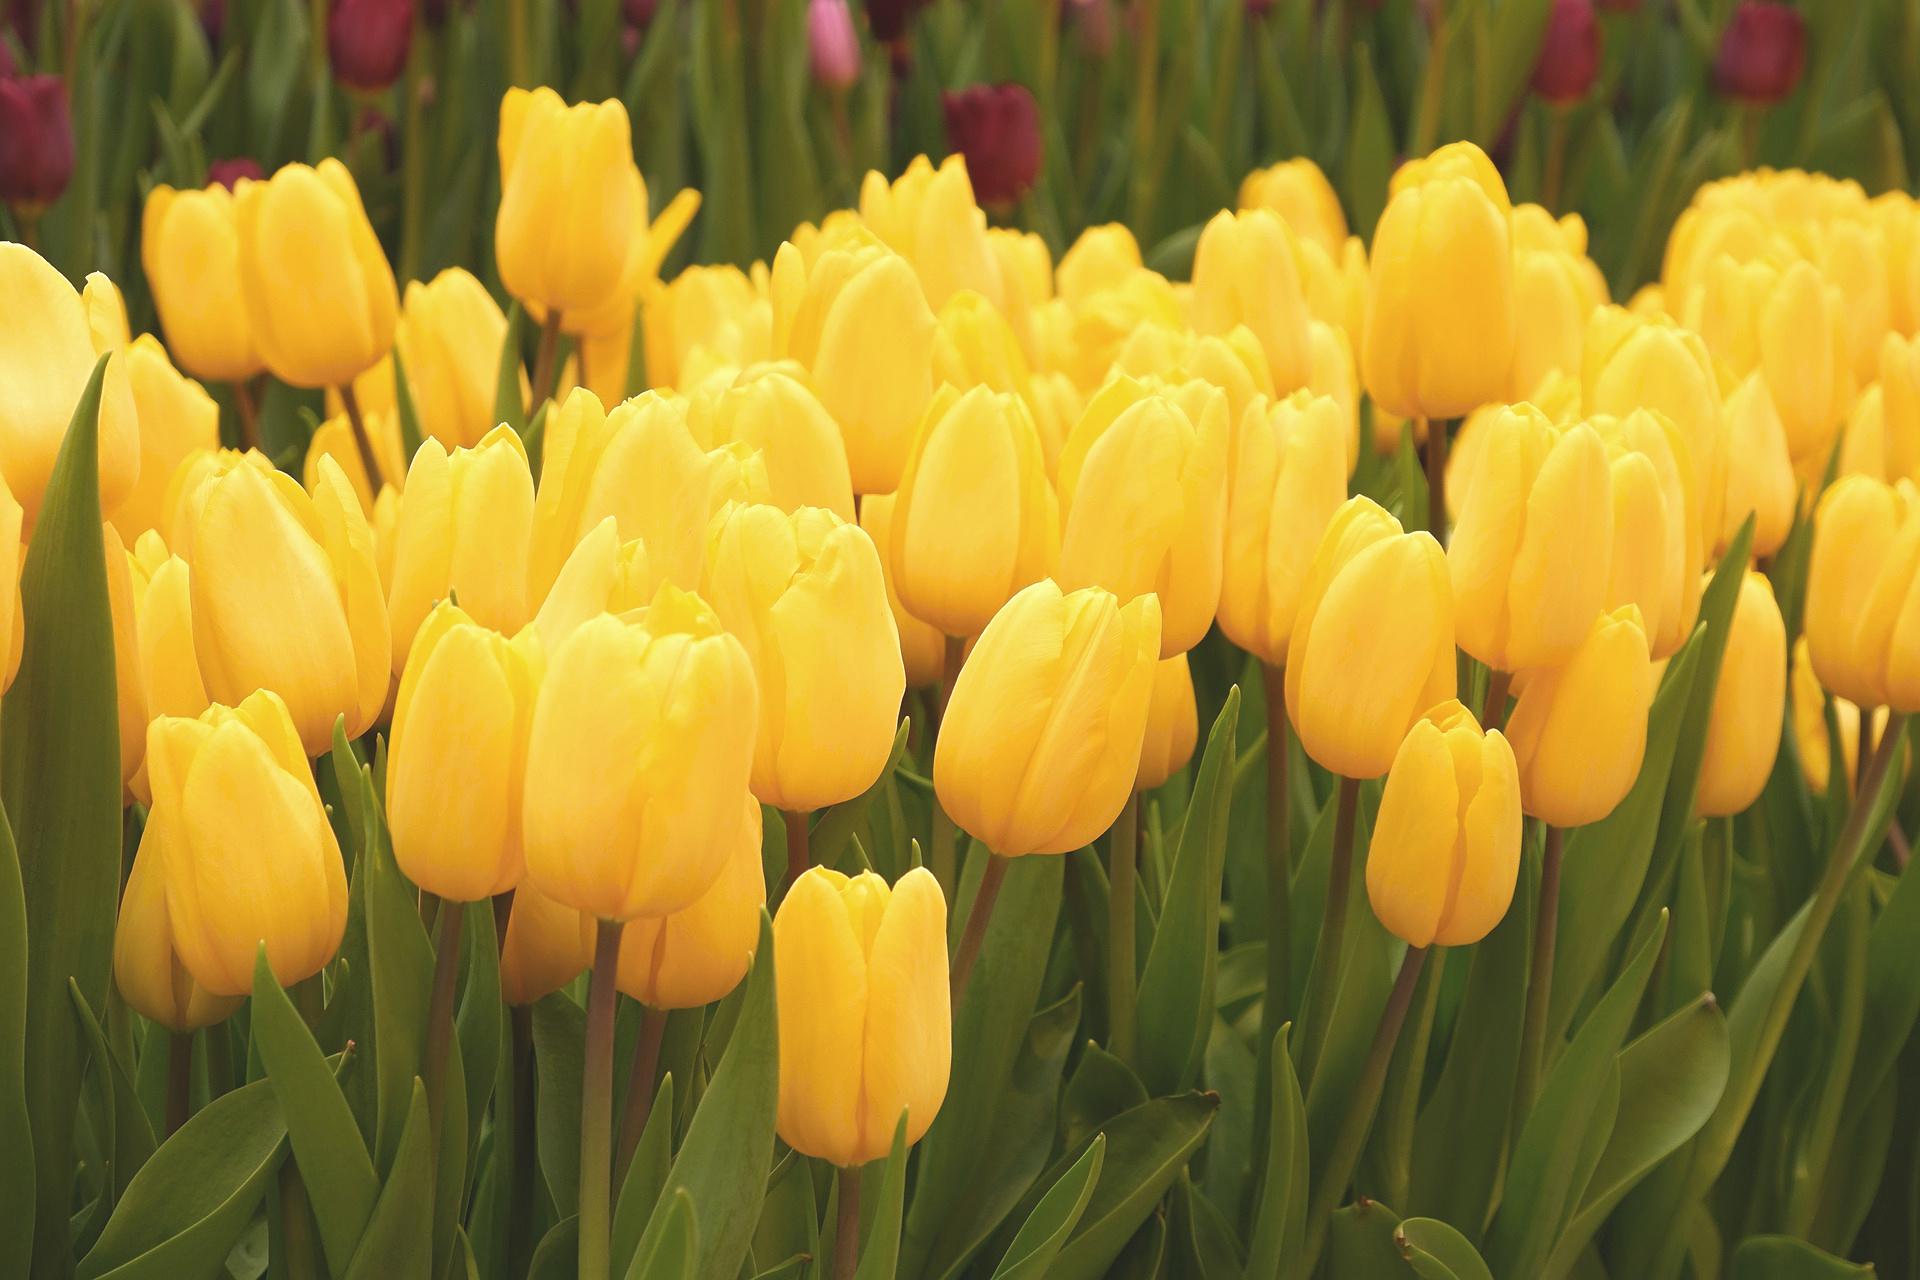 Tulip Triumph 'Yellow Flight' - Tulip from Leo Berbee Bulb Company